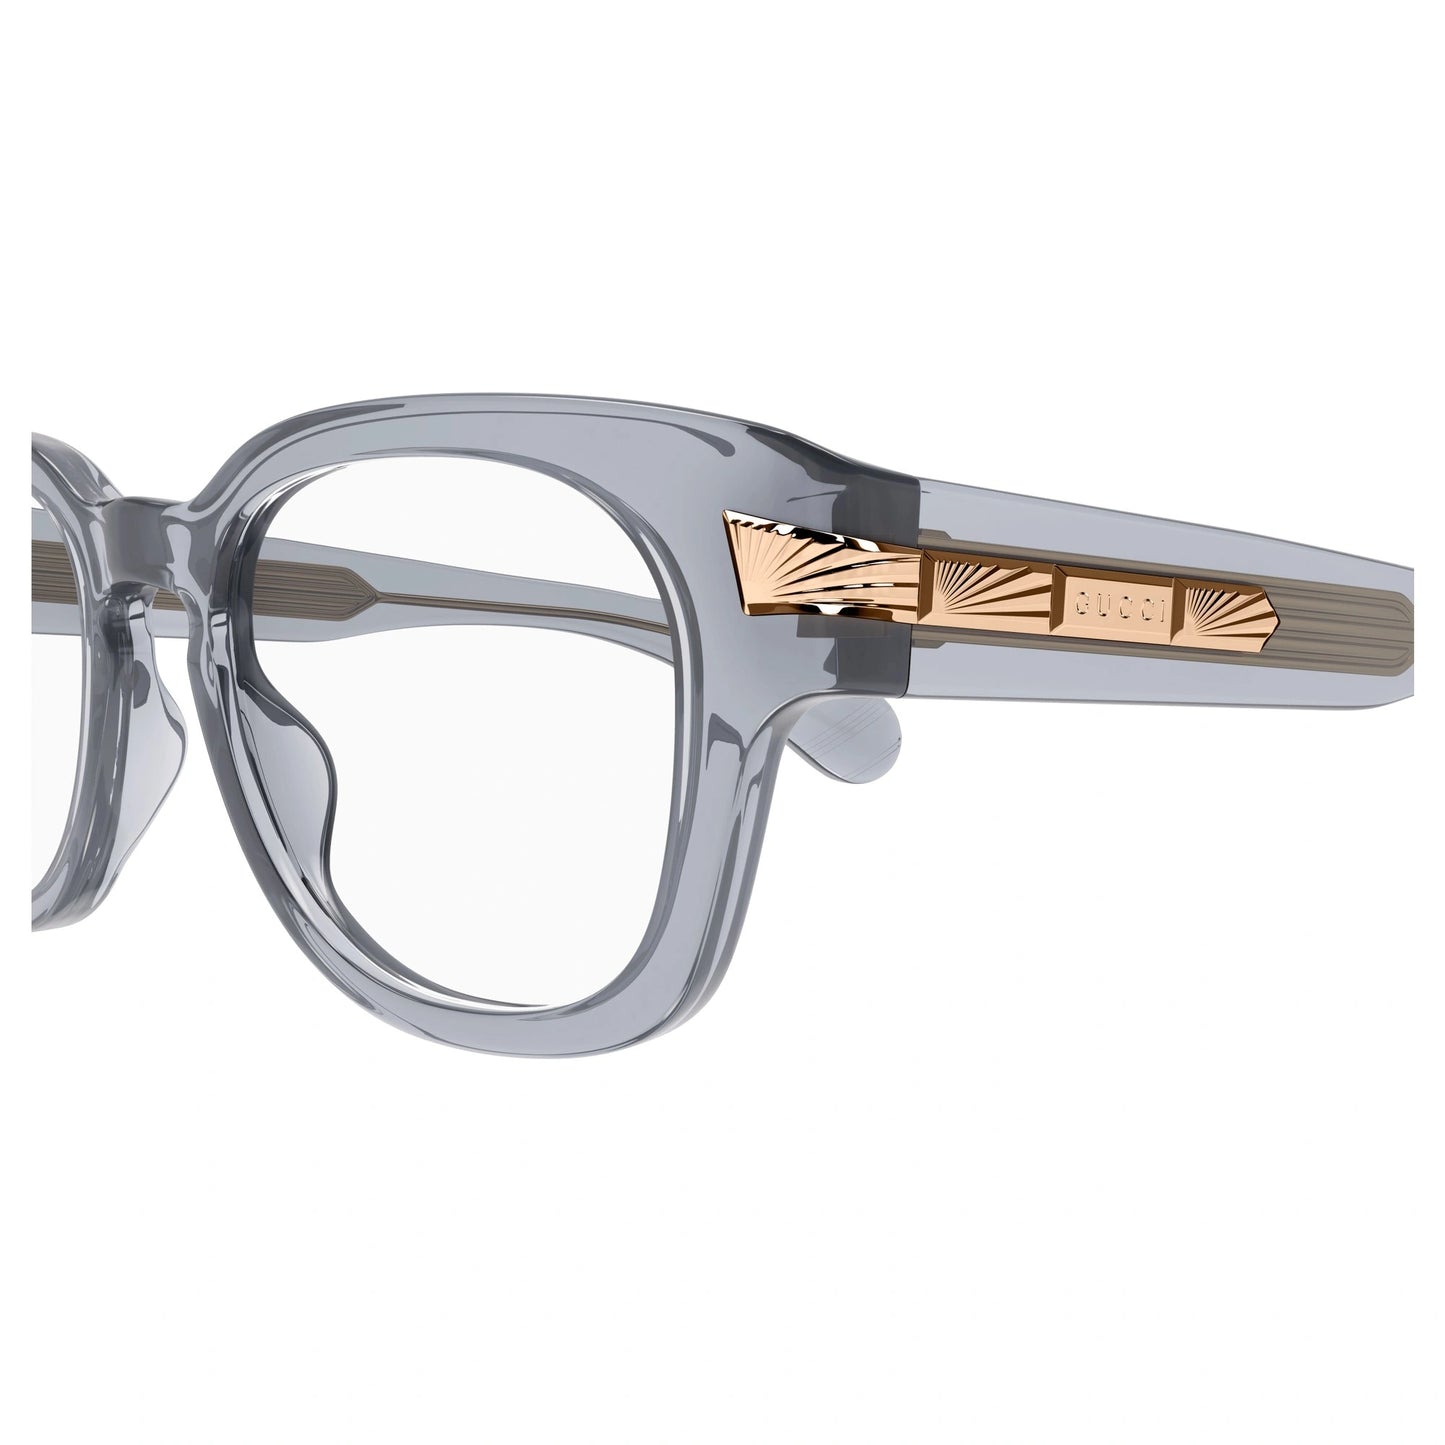 Gucci GG1518o-003 51mm New Eyeglasses